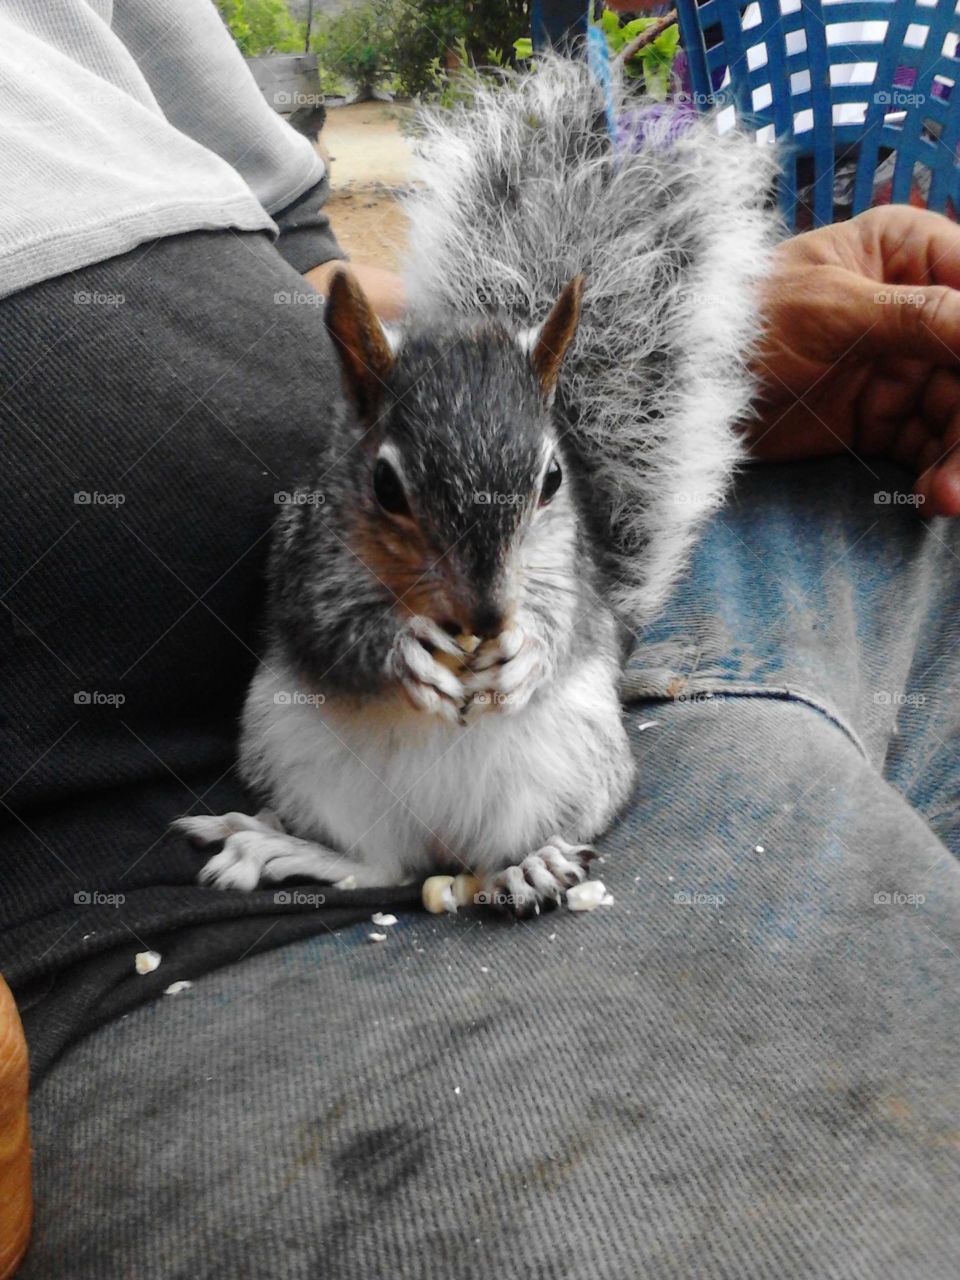 Squirrel eating 